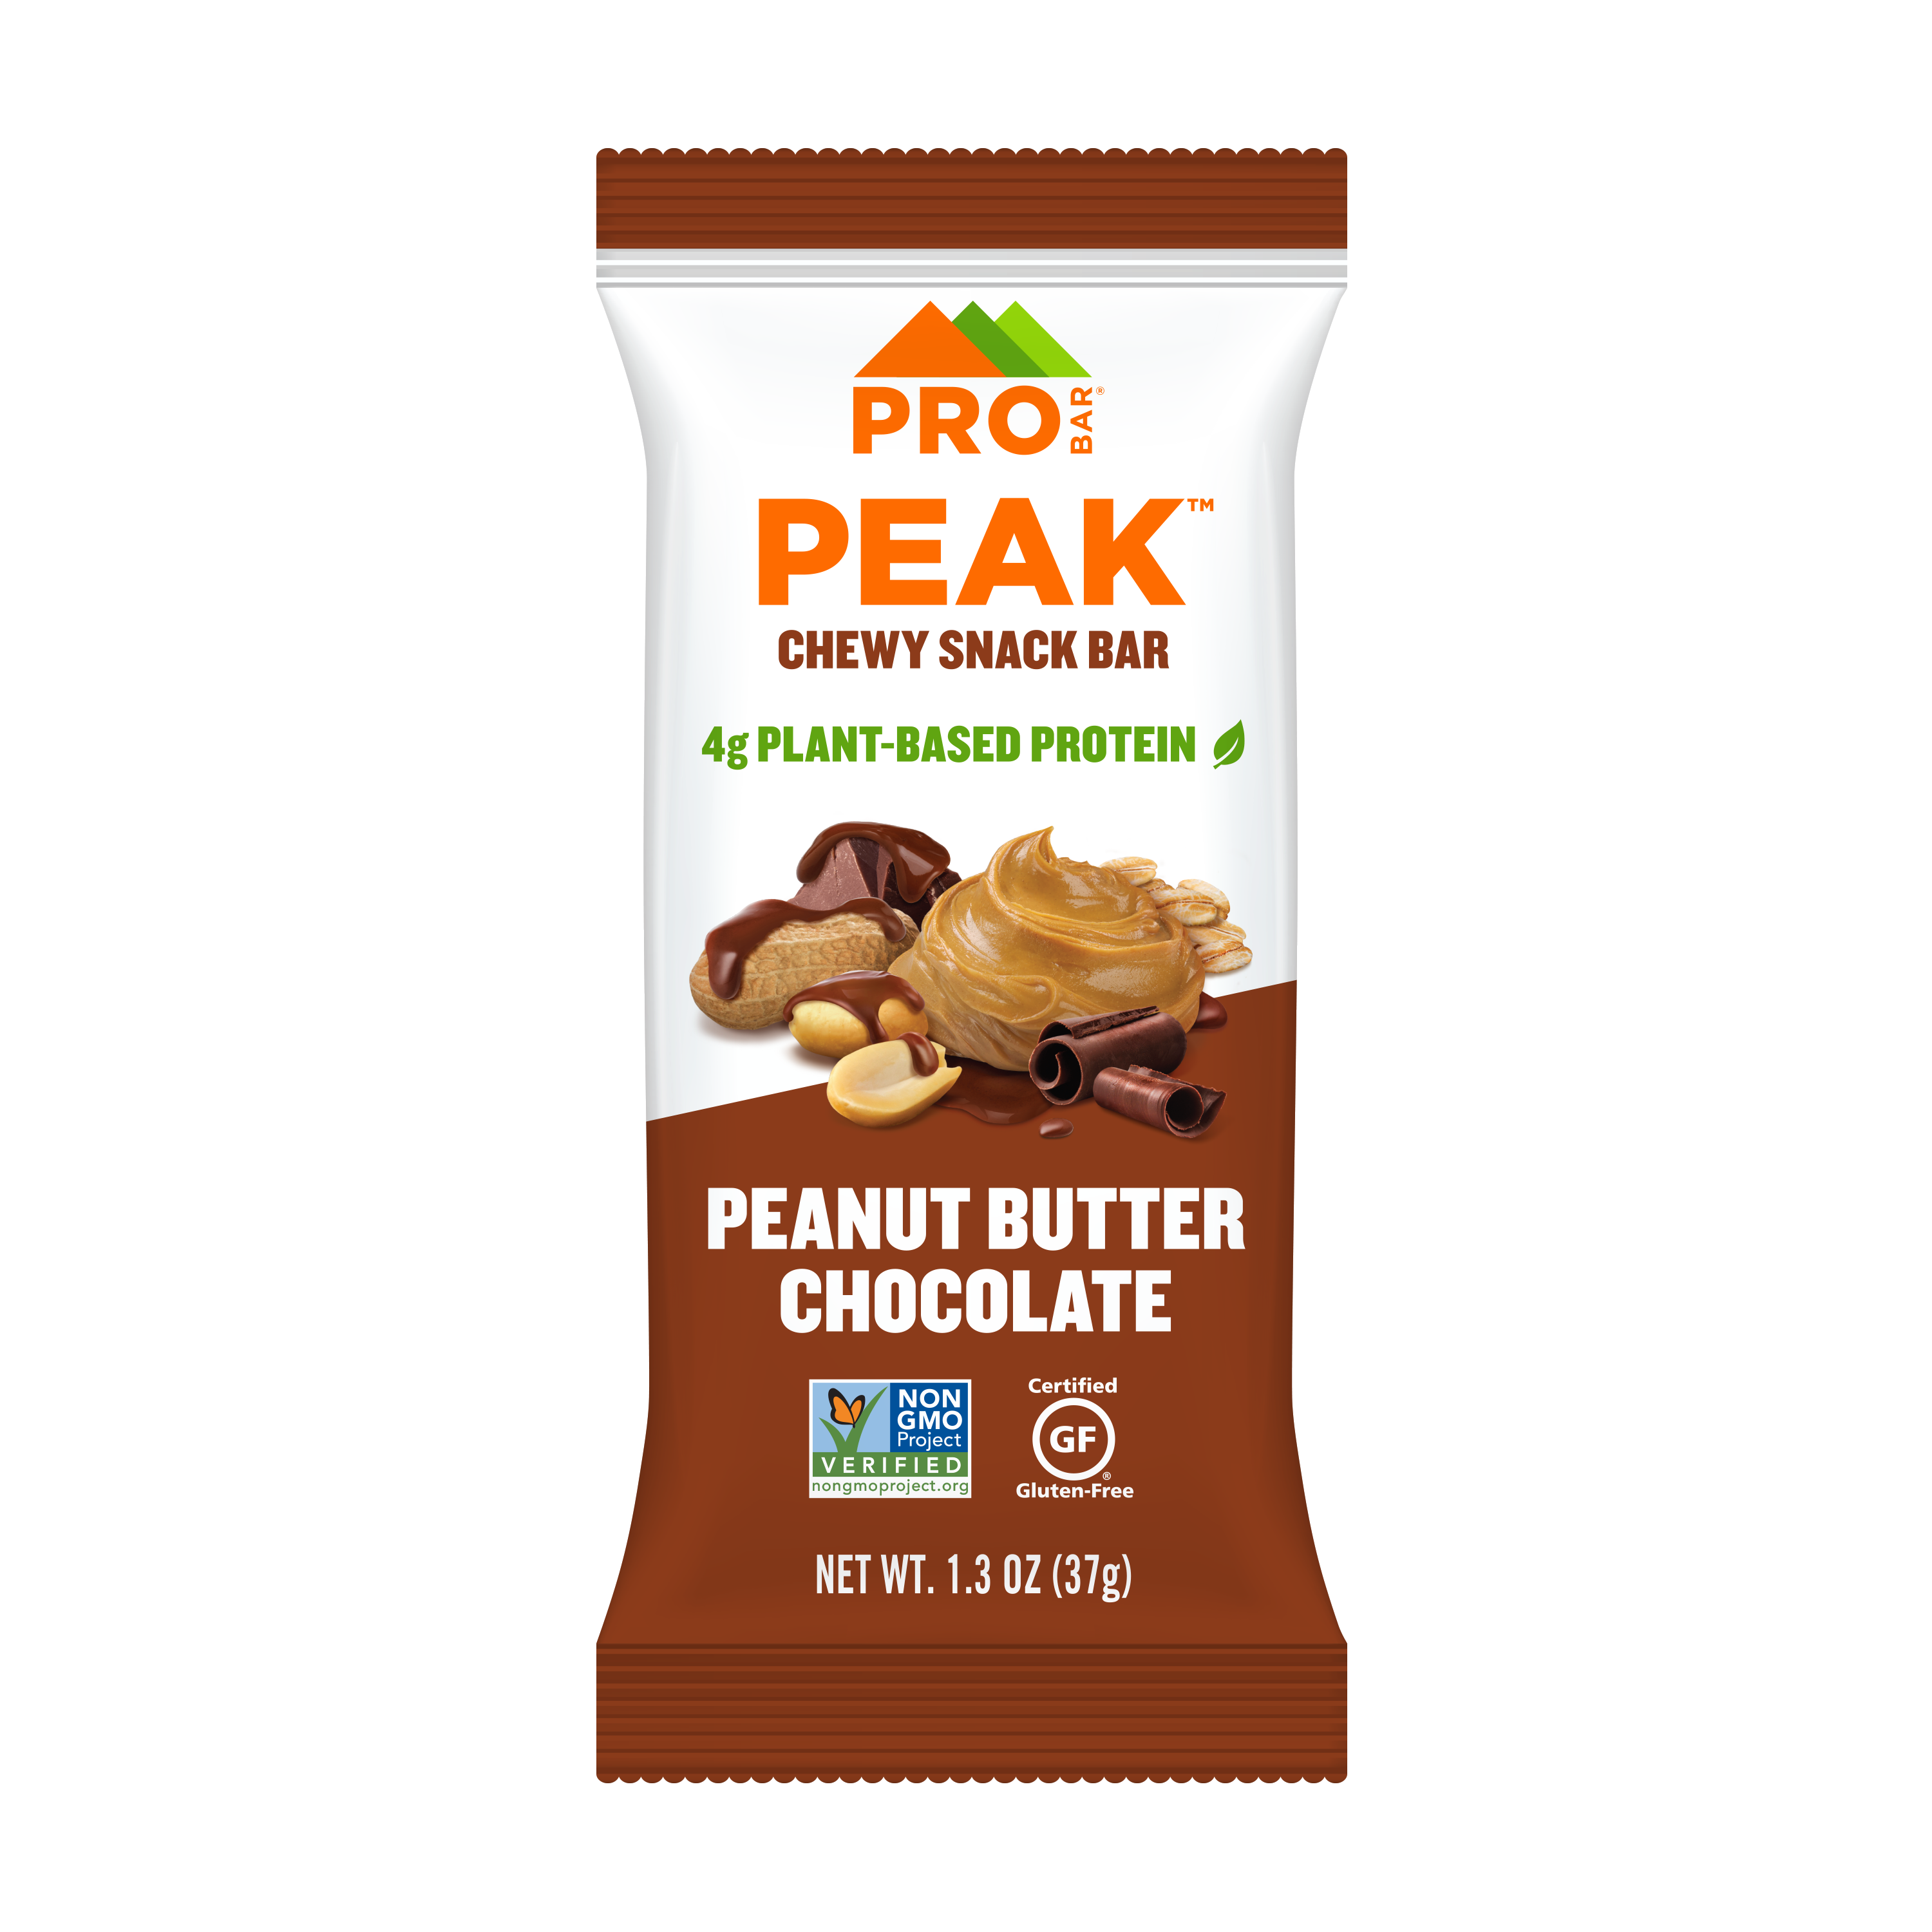 ProBar Peanut Butter Chocolate Peak Chewy Snack Bar 8 innerpacks per case 1.3 oz